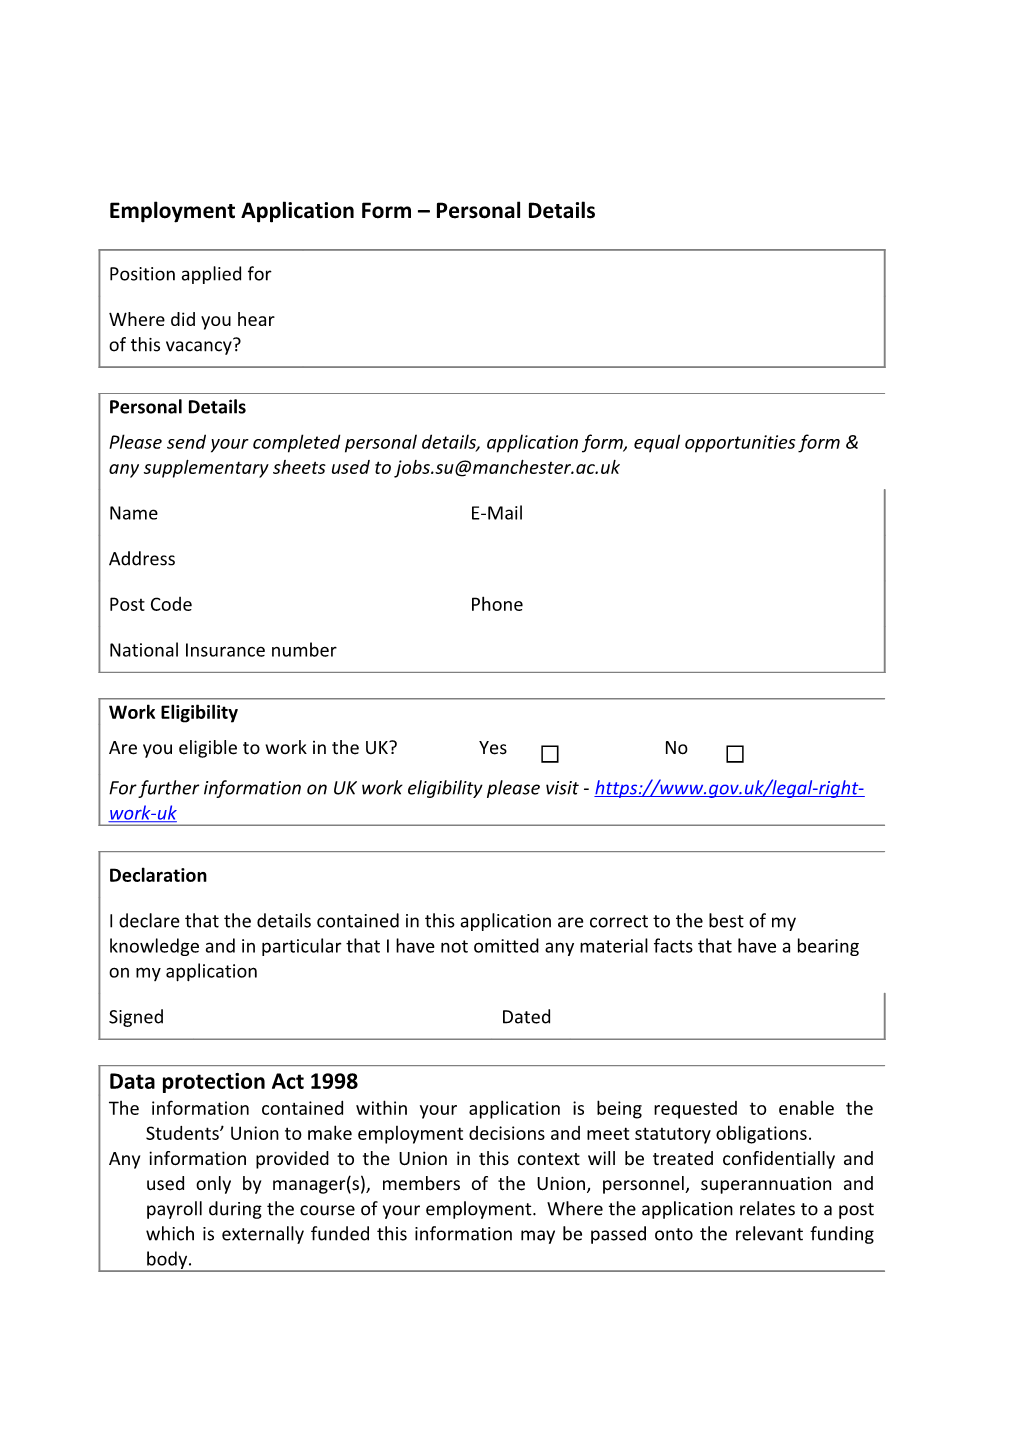 Employment Application Form Personal Details s2